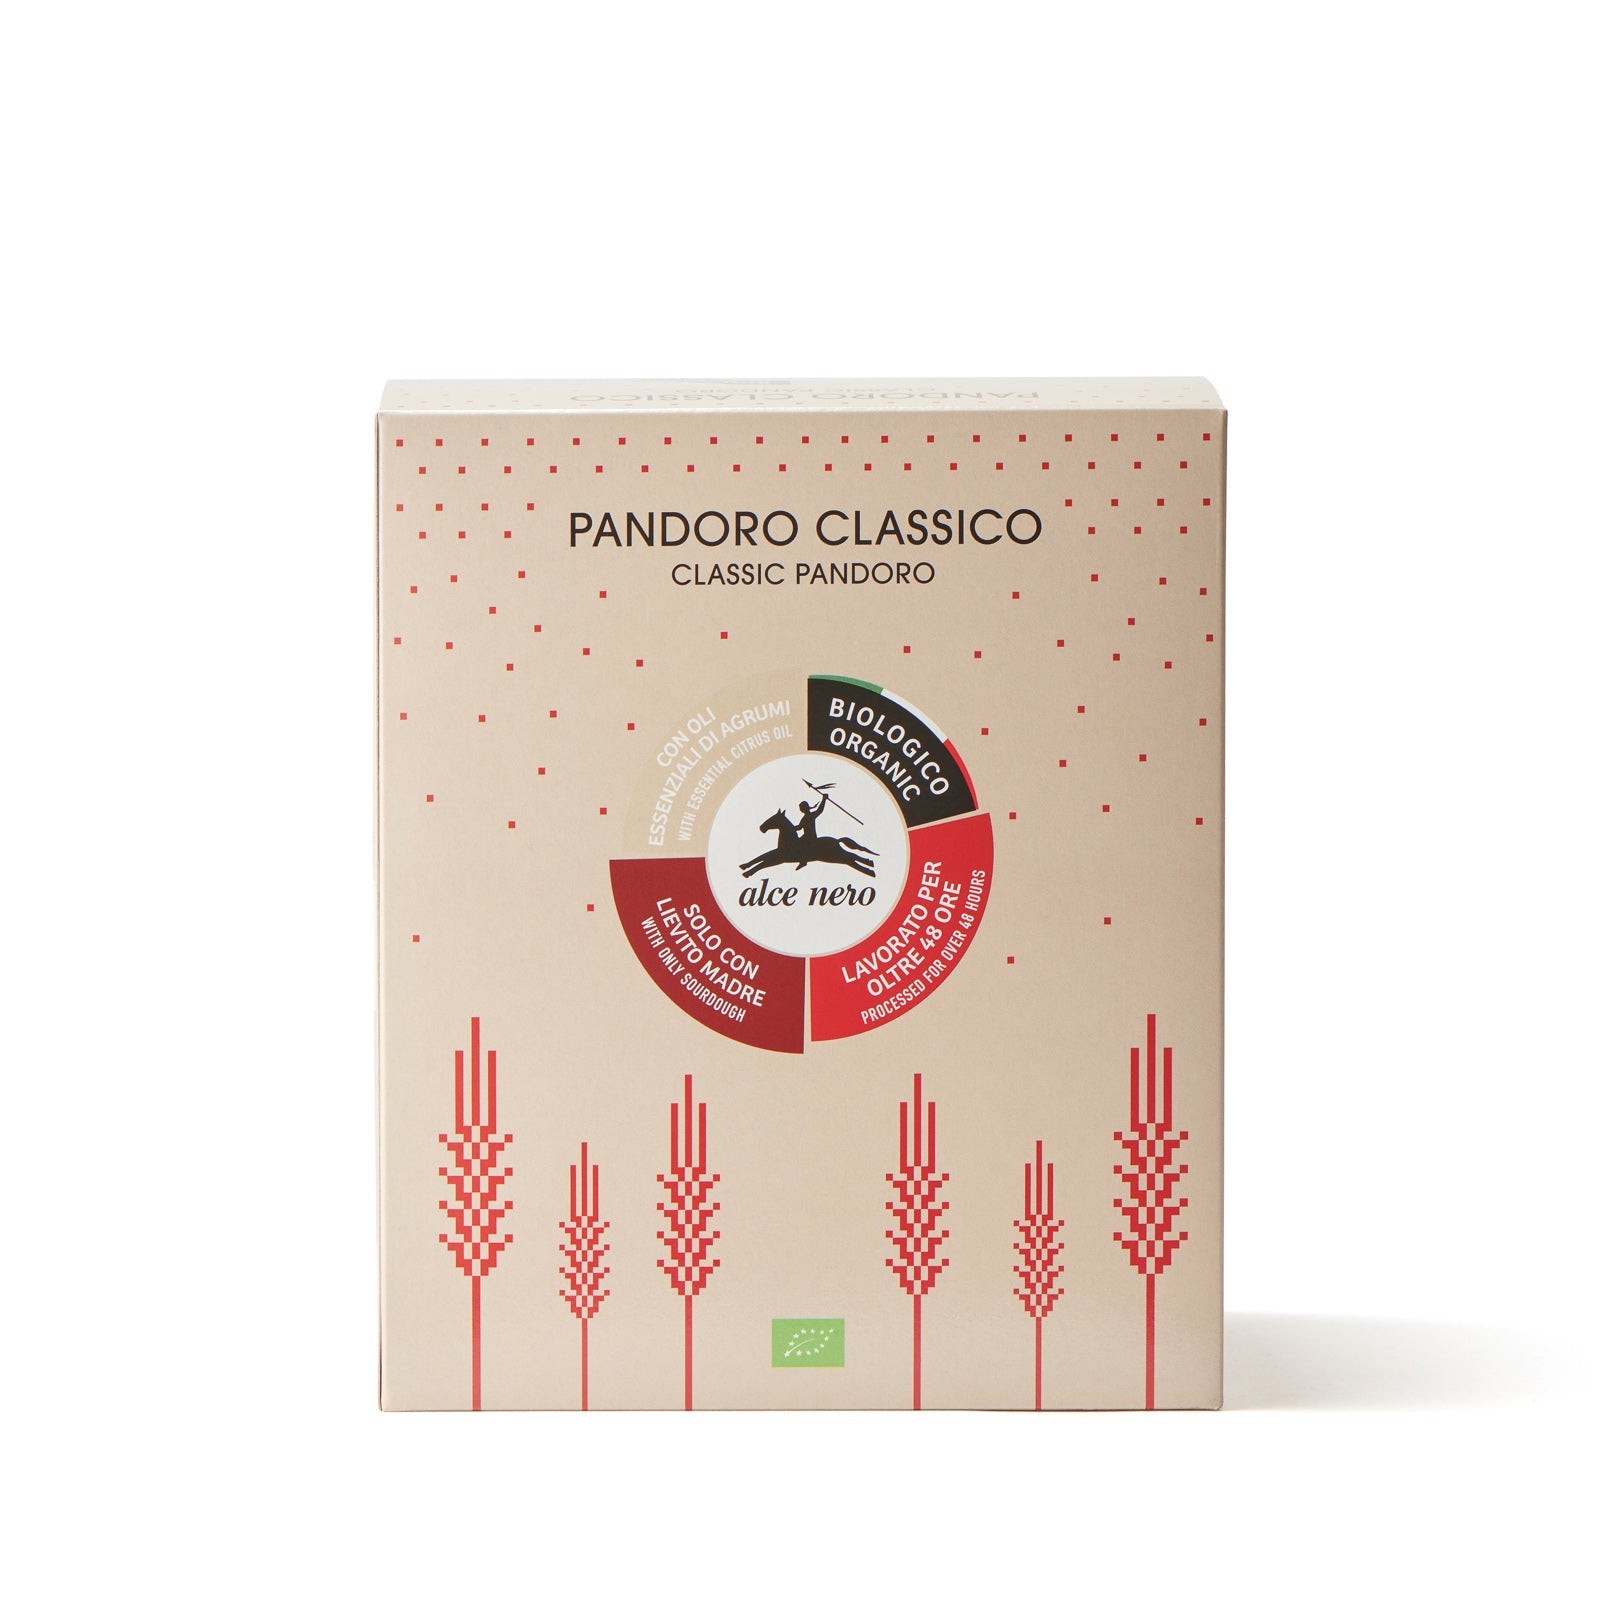 Organic Classic Pandoro PANDO600